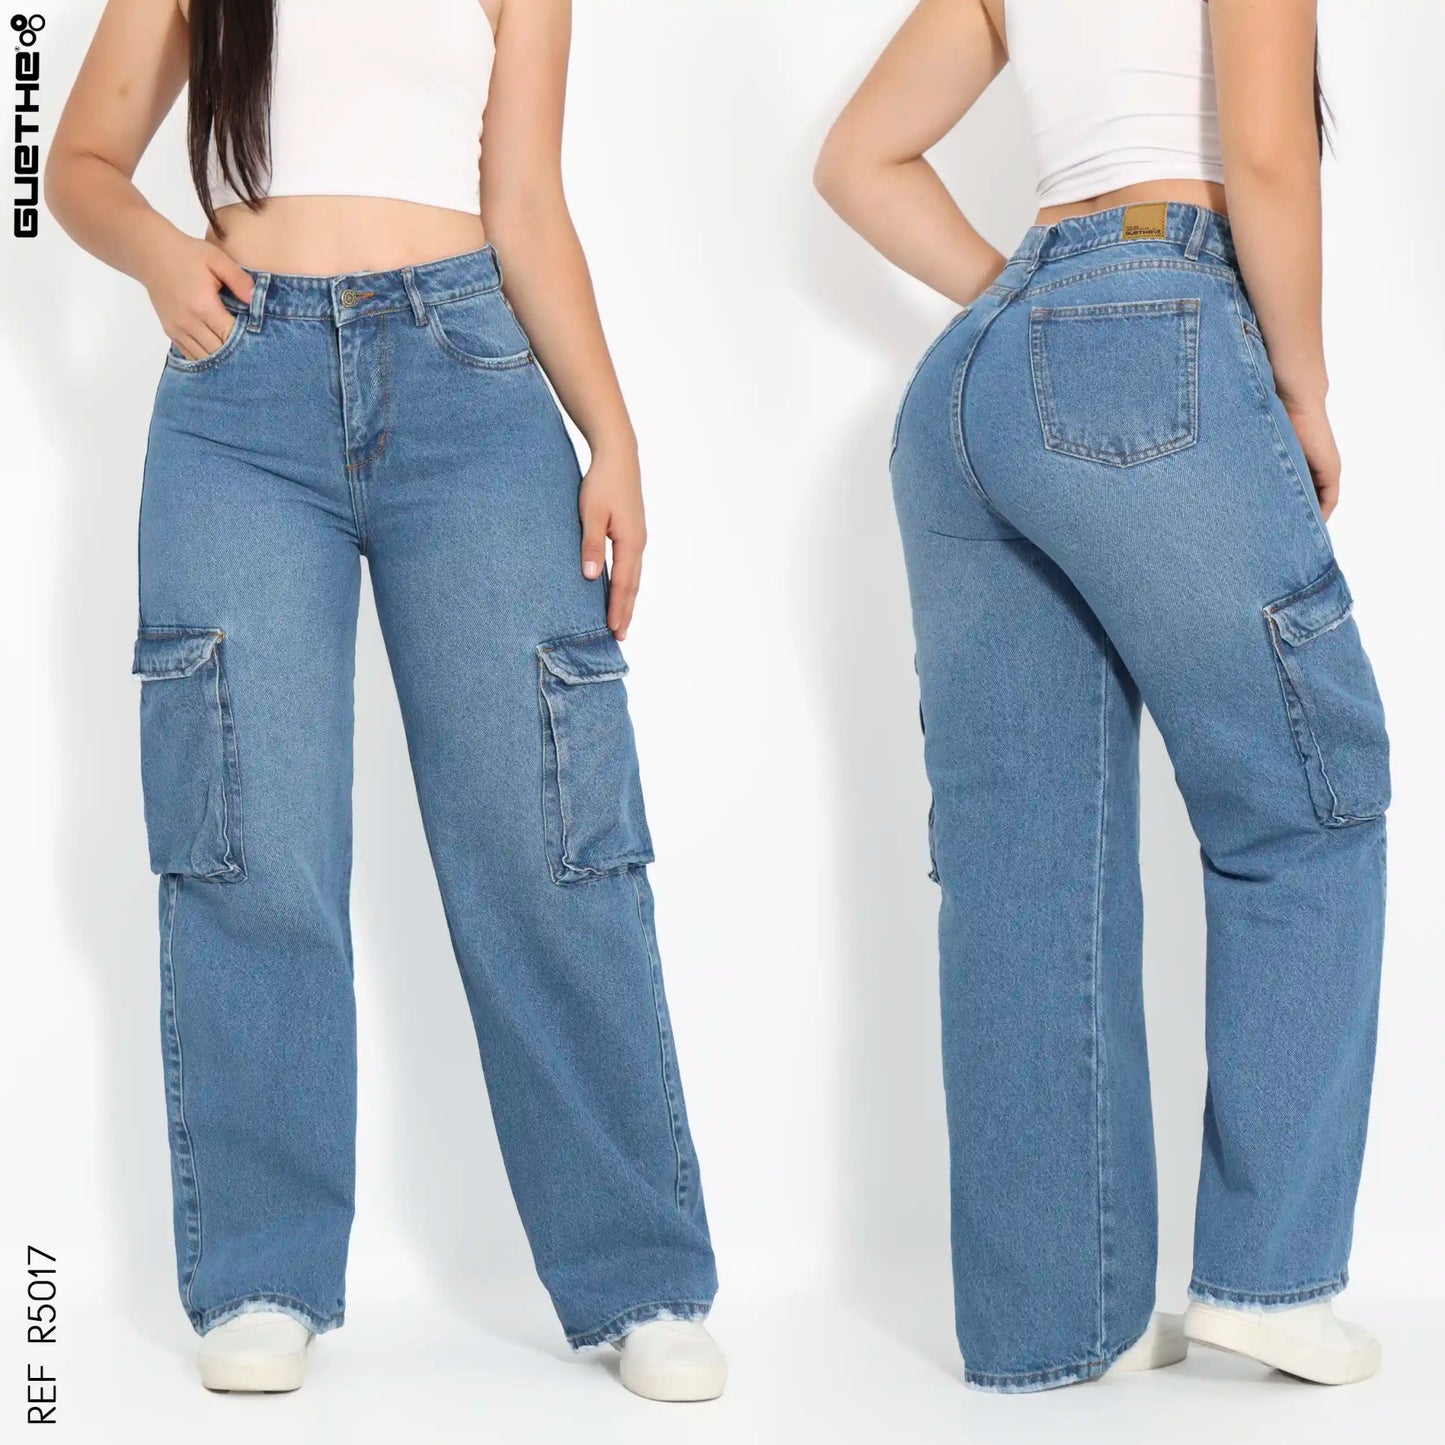 Jeans Cargo Rígido Mujer R5017